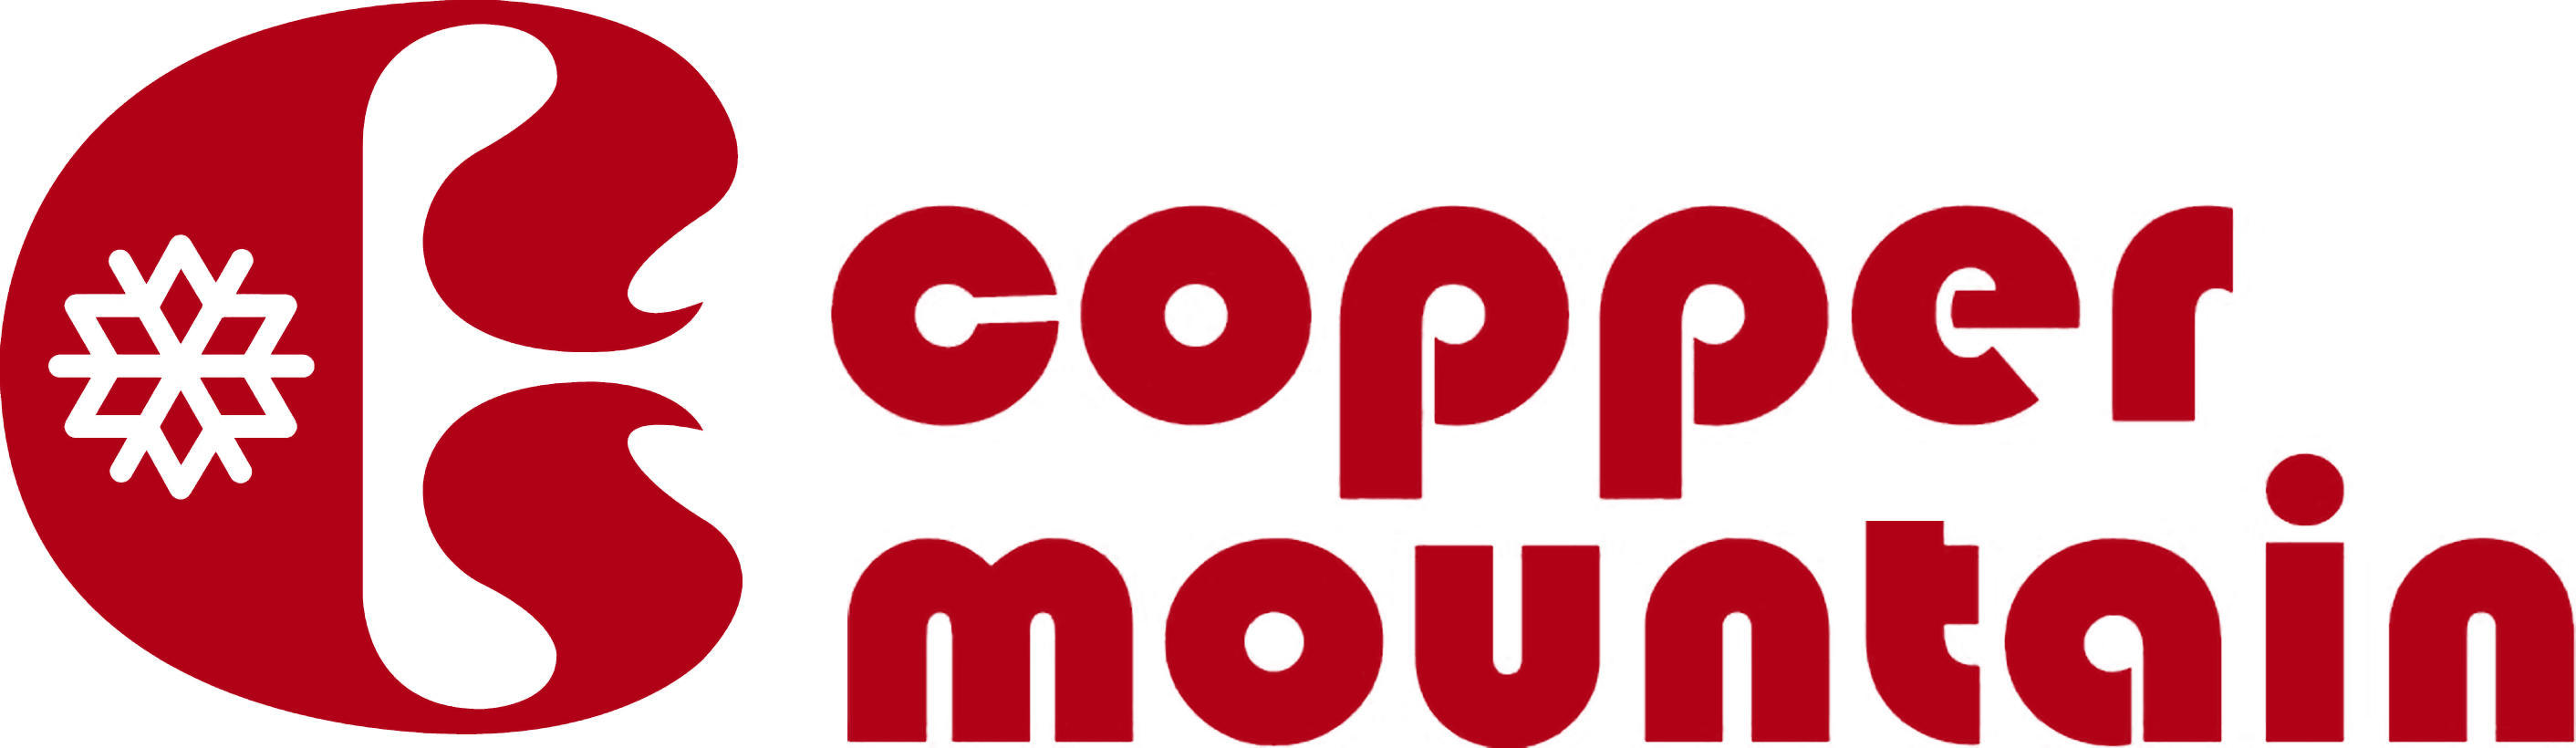 Copper Mountain Logo - Copper Mountain Resort Schedule & Reviews